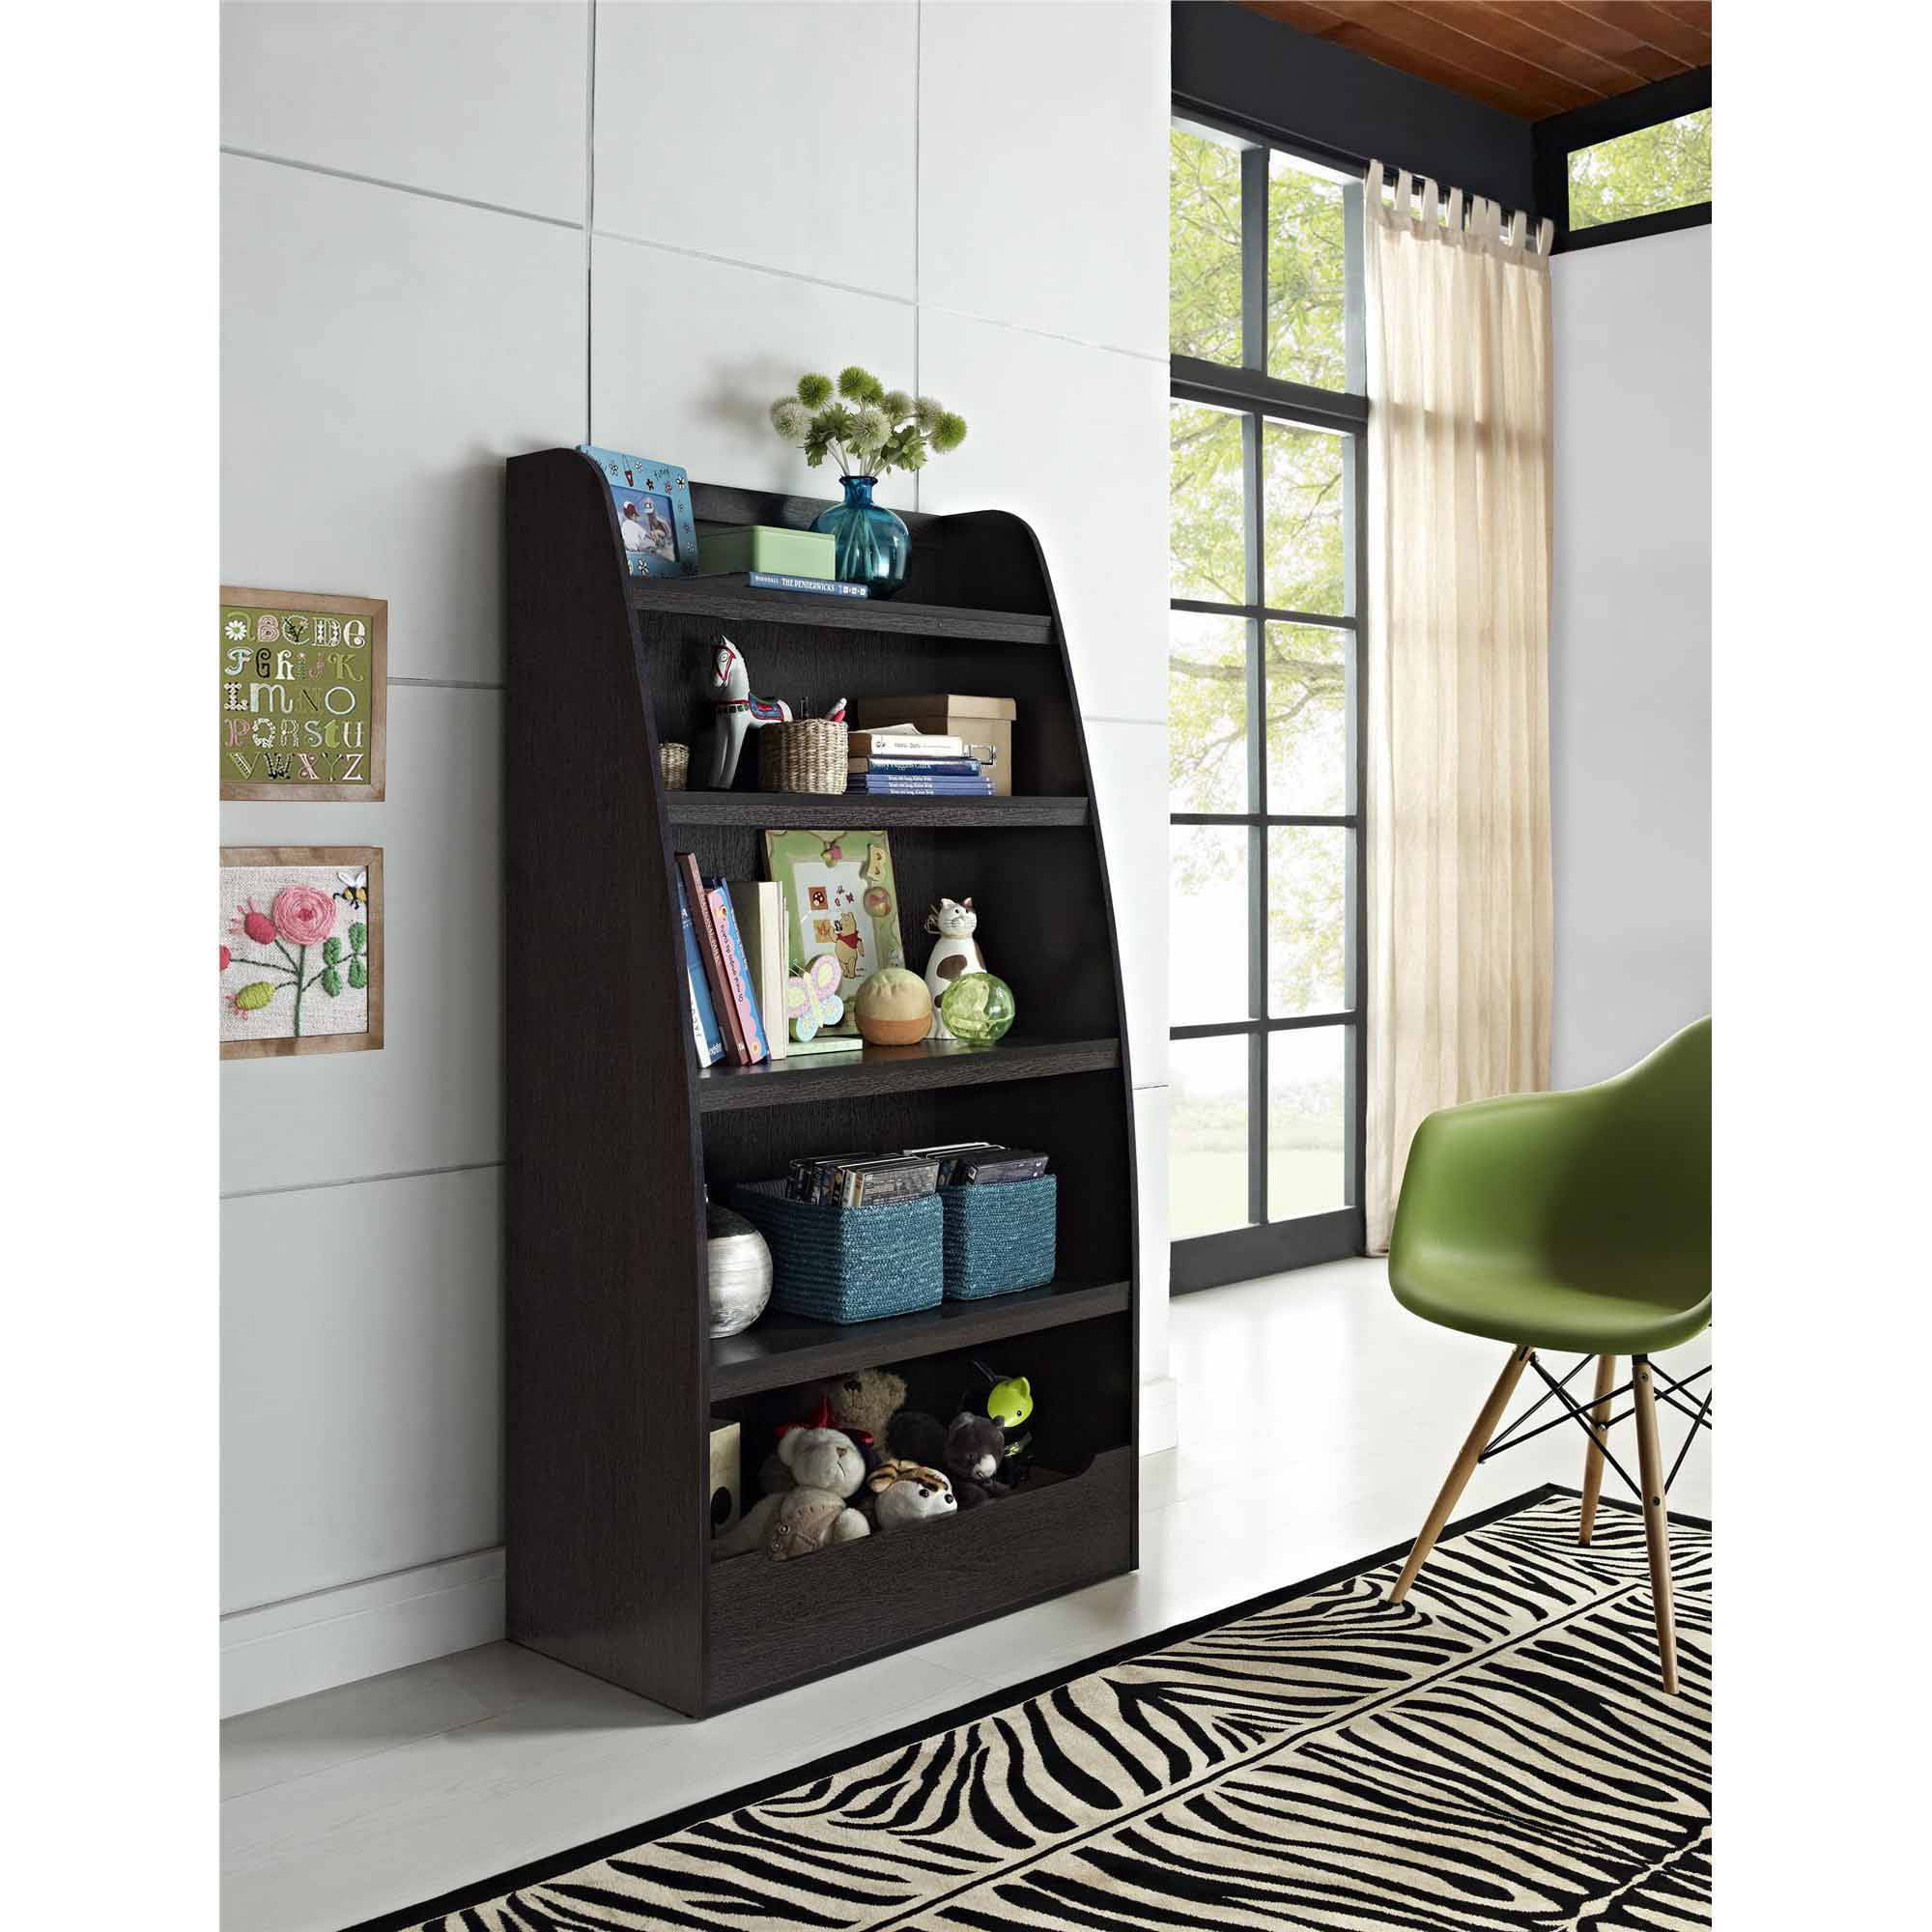 Minimalist Kids Bookcase with Simple Decor